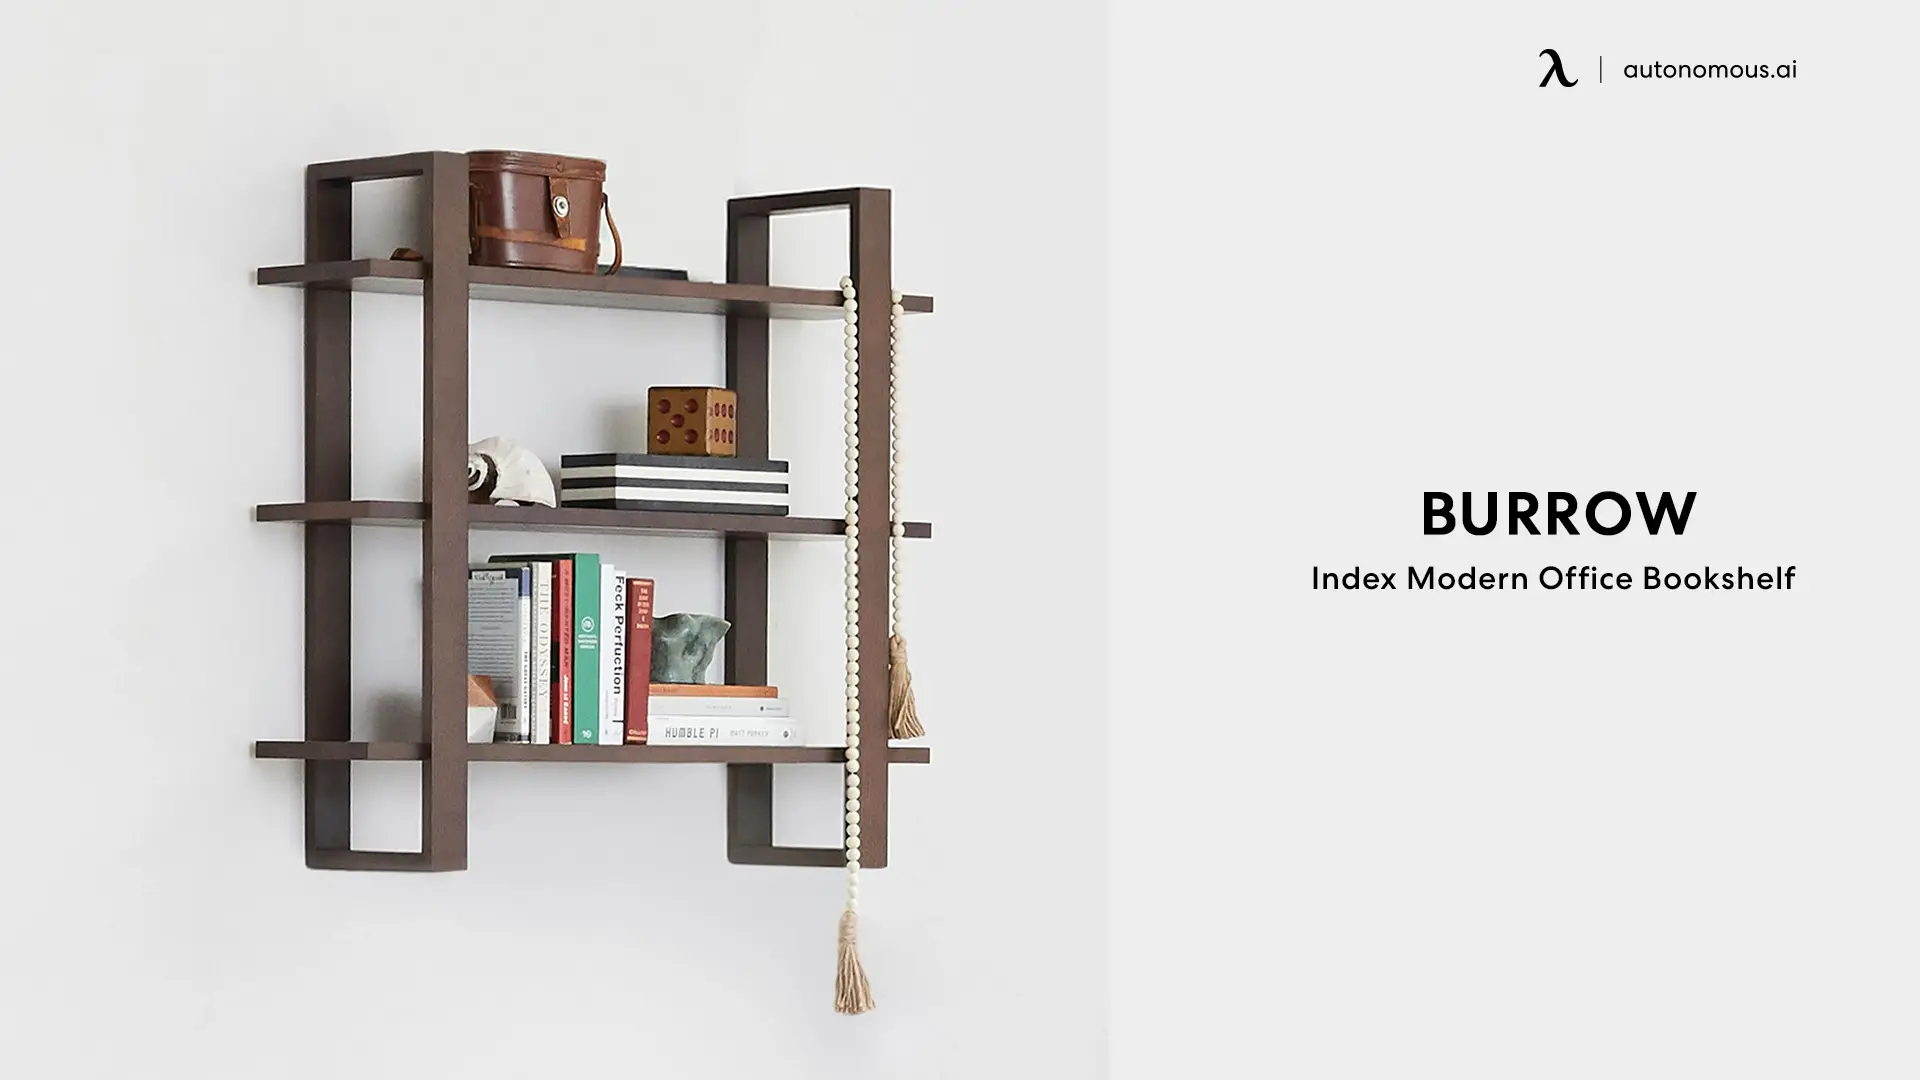 Burrow Index Modern Office Bookshelf